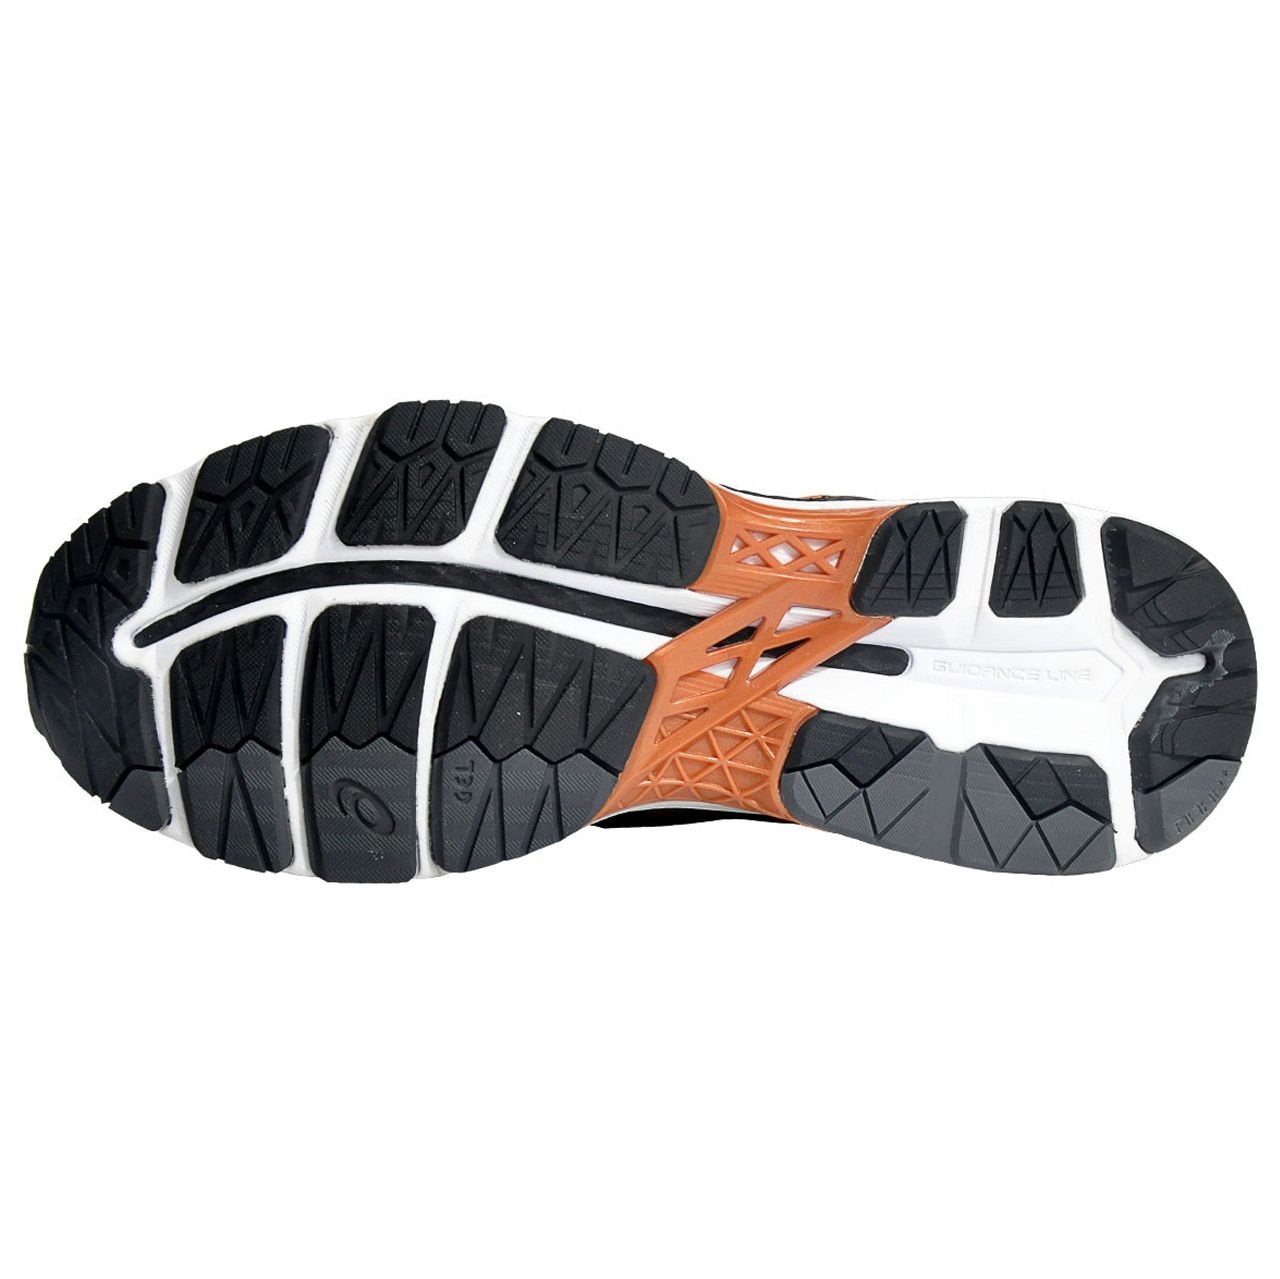 کفش مخصوص دویدن مردانه مدل gel kayano کد T8797N